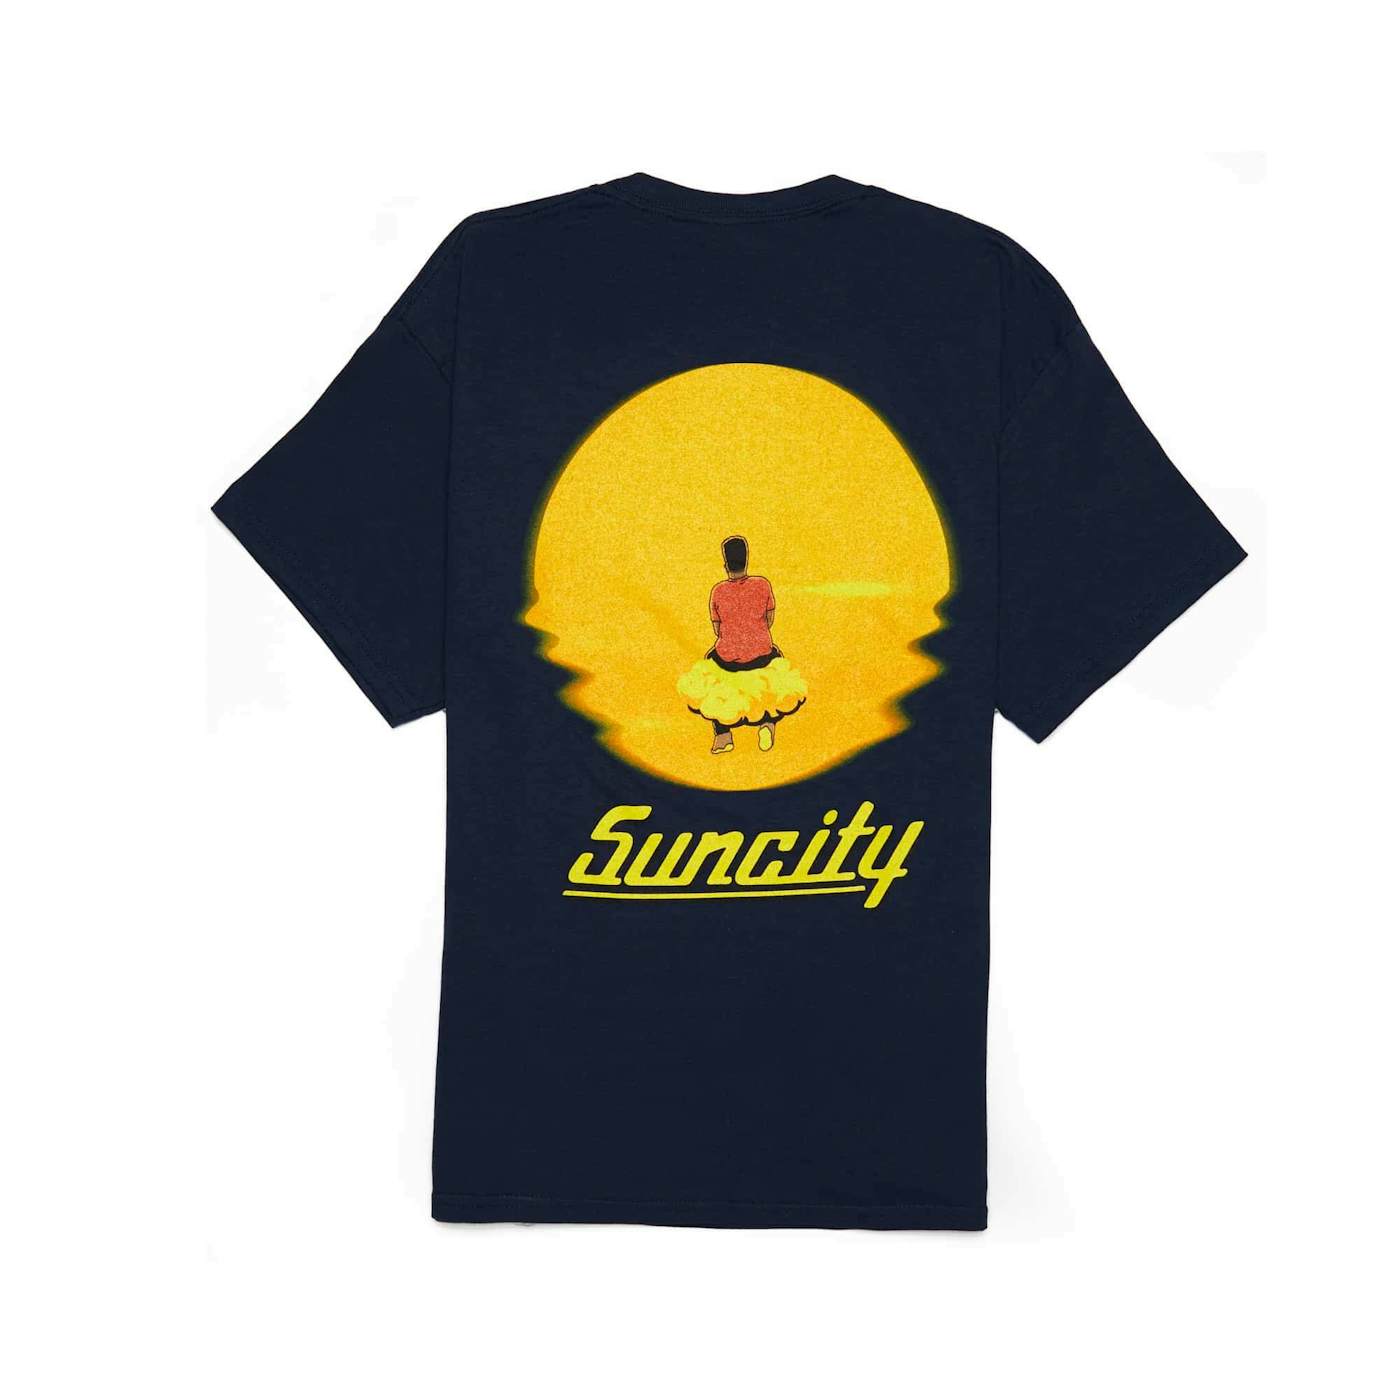 Khalid 'Suncity' Tee + Digital Download - Navy